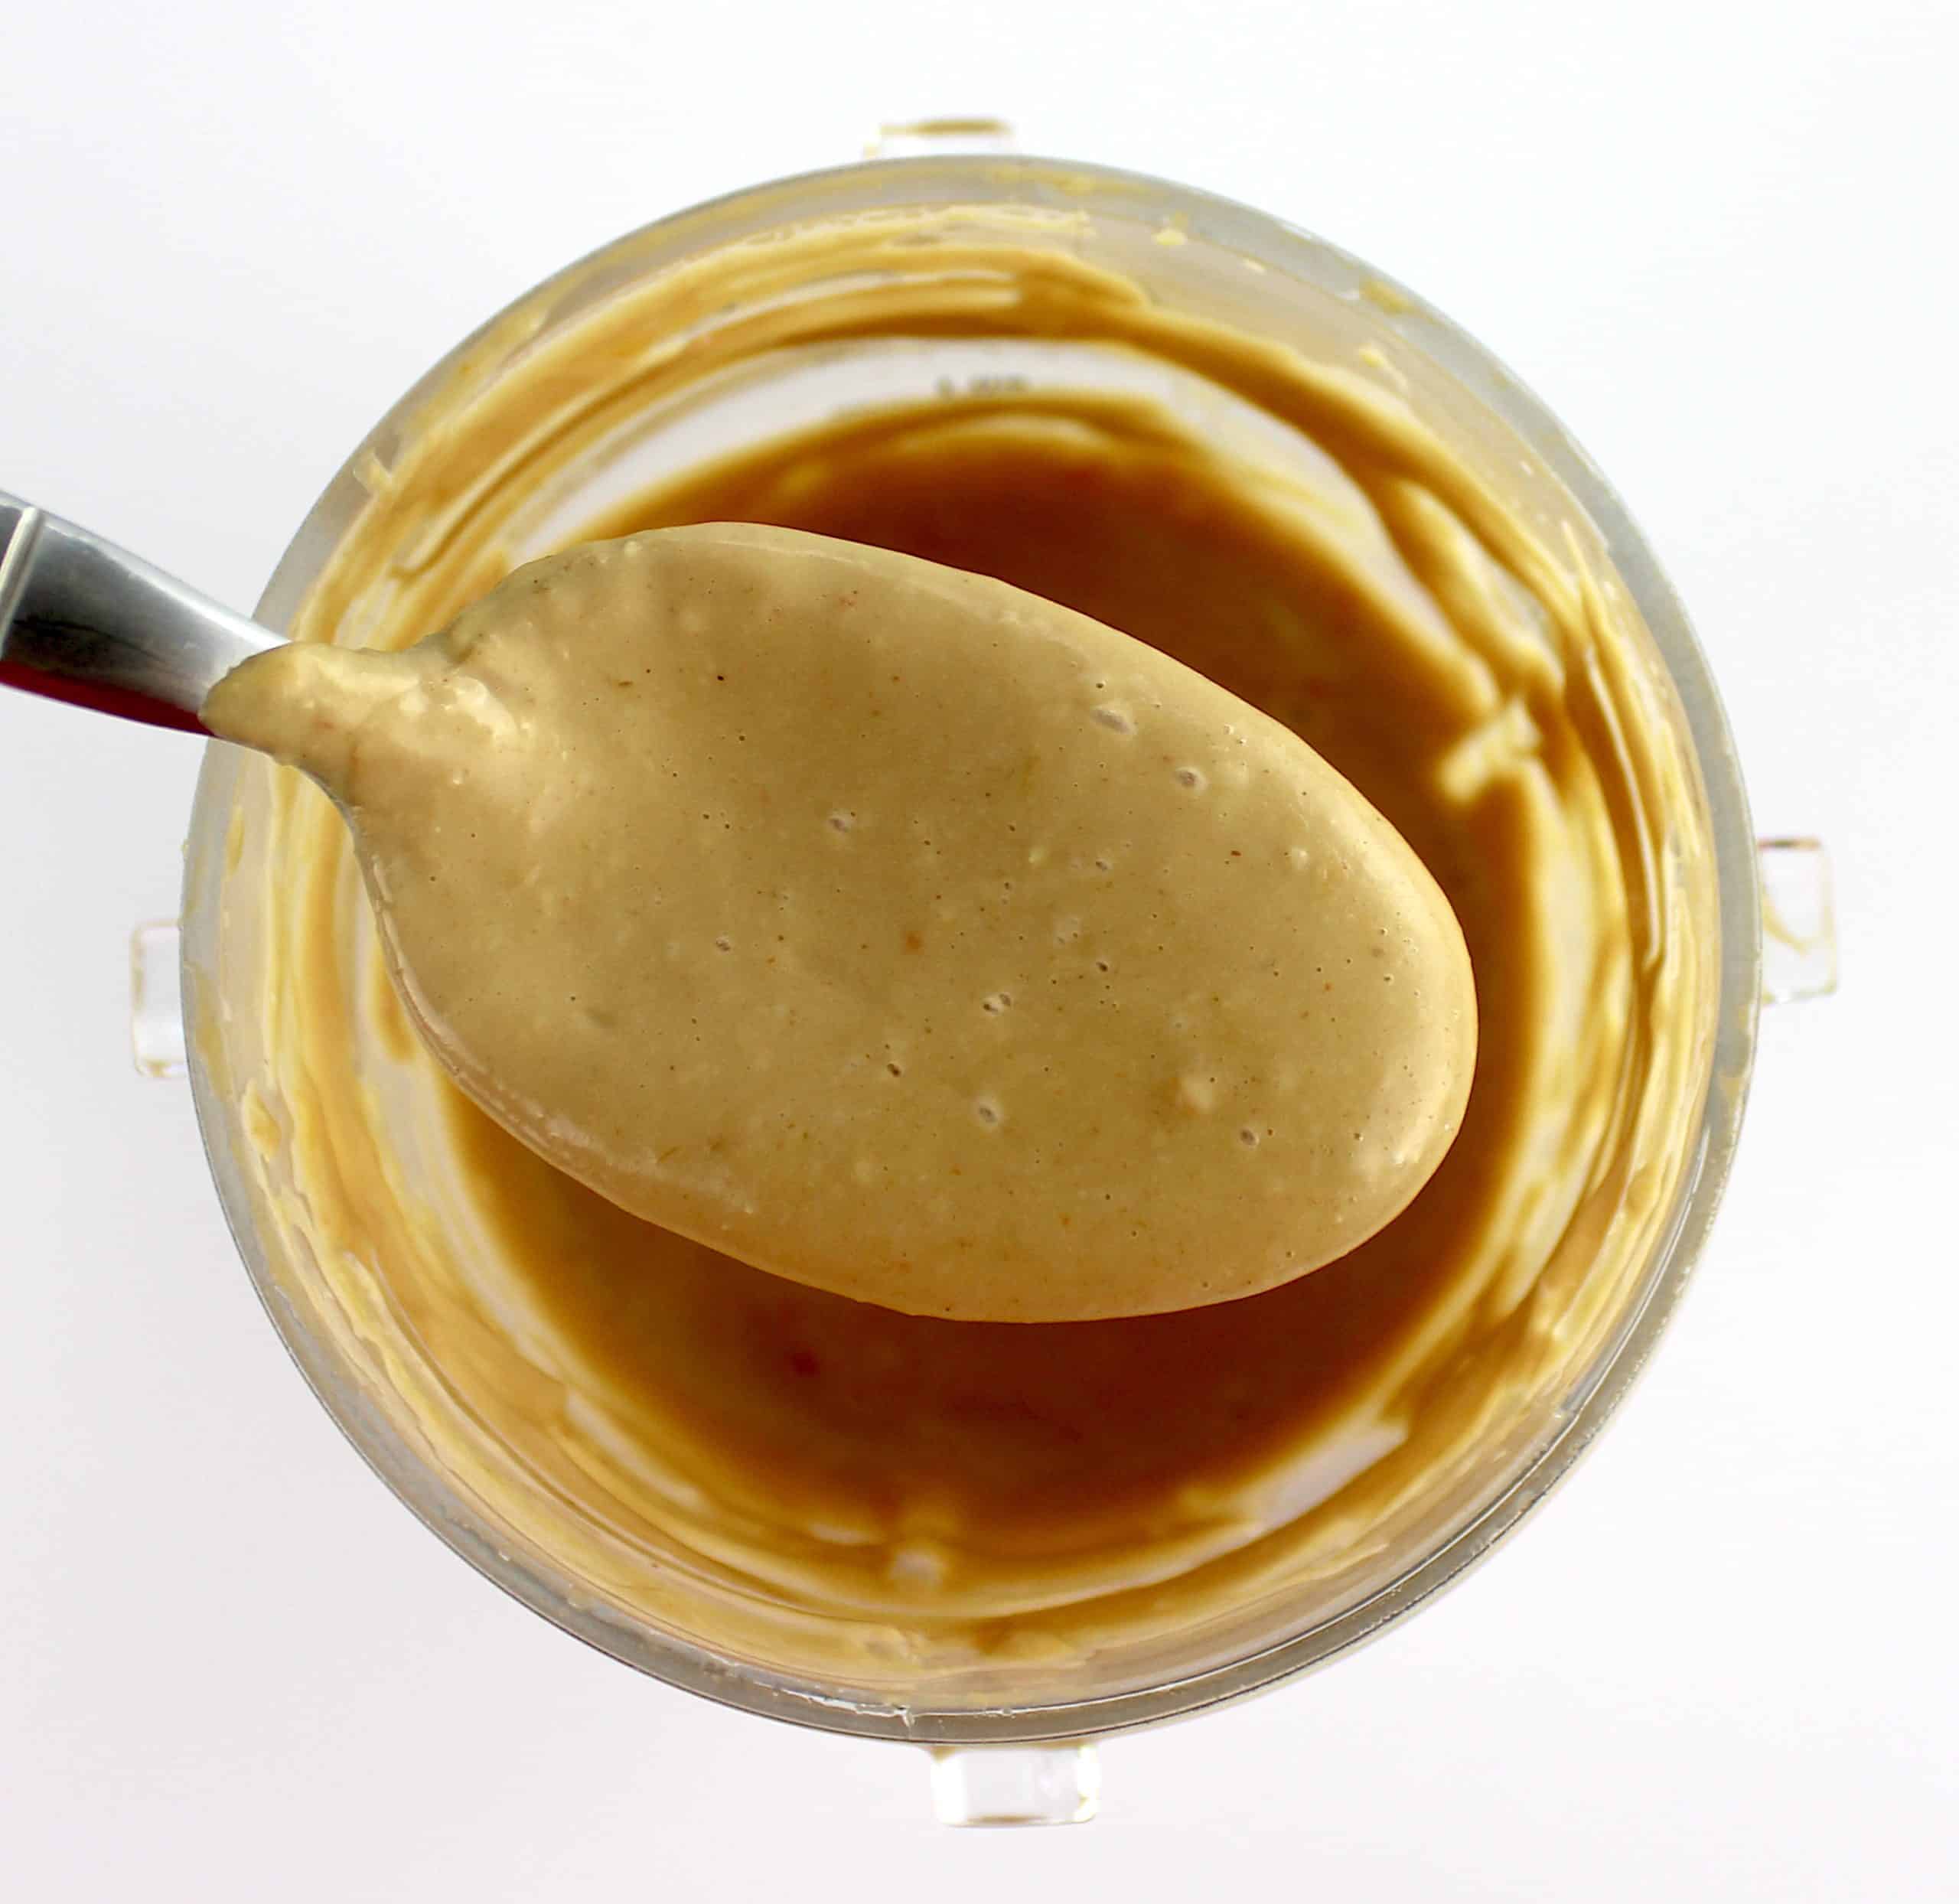 peanut sauce in spoon held up over bullet blender cup